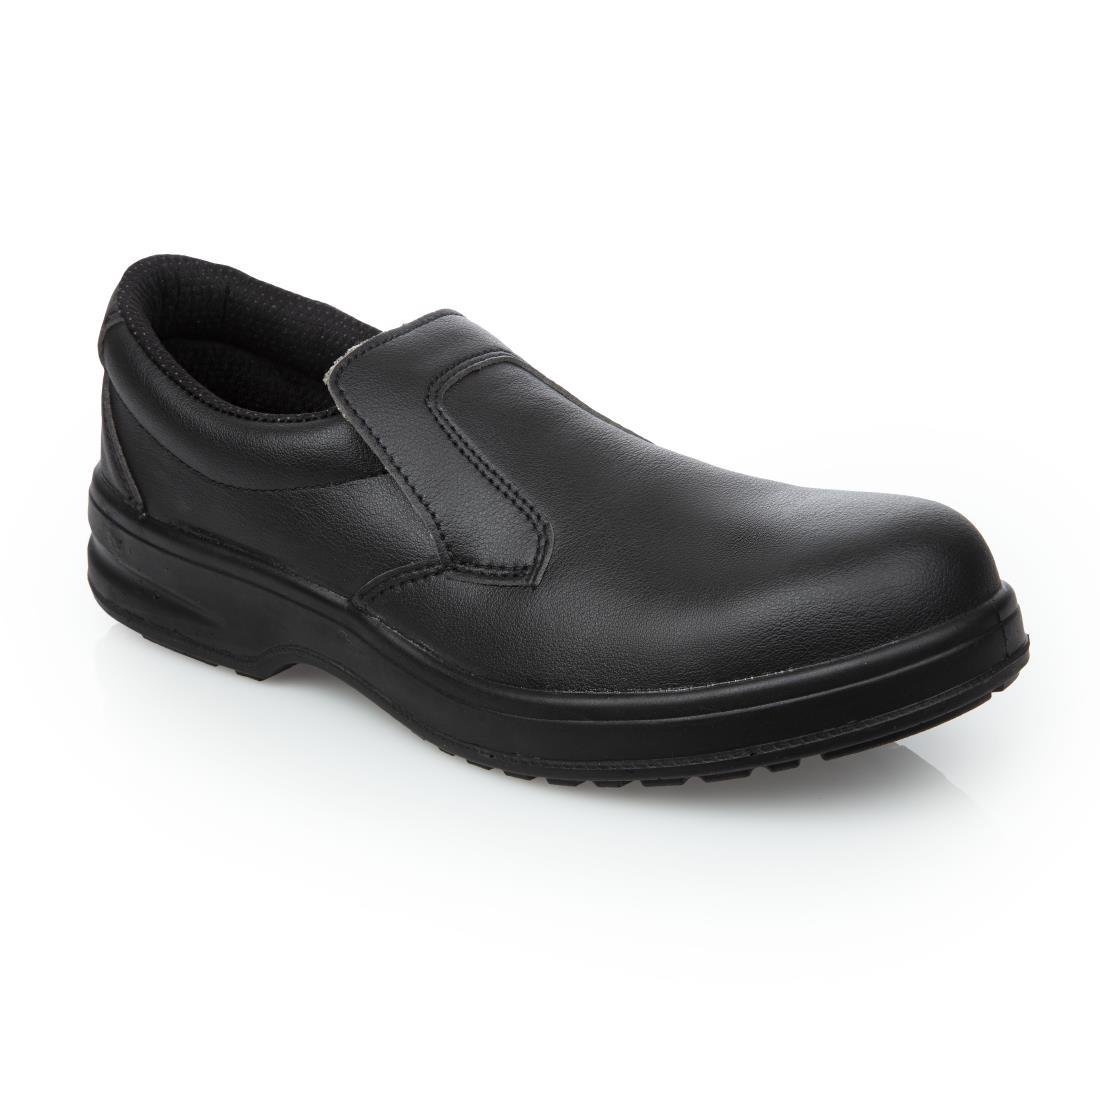 Slipbuster Lite Slip On Safety Shoes Black 41 - A845-41  - 1